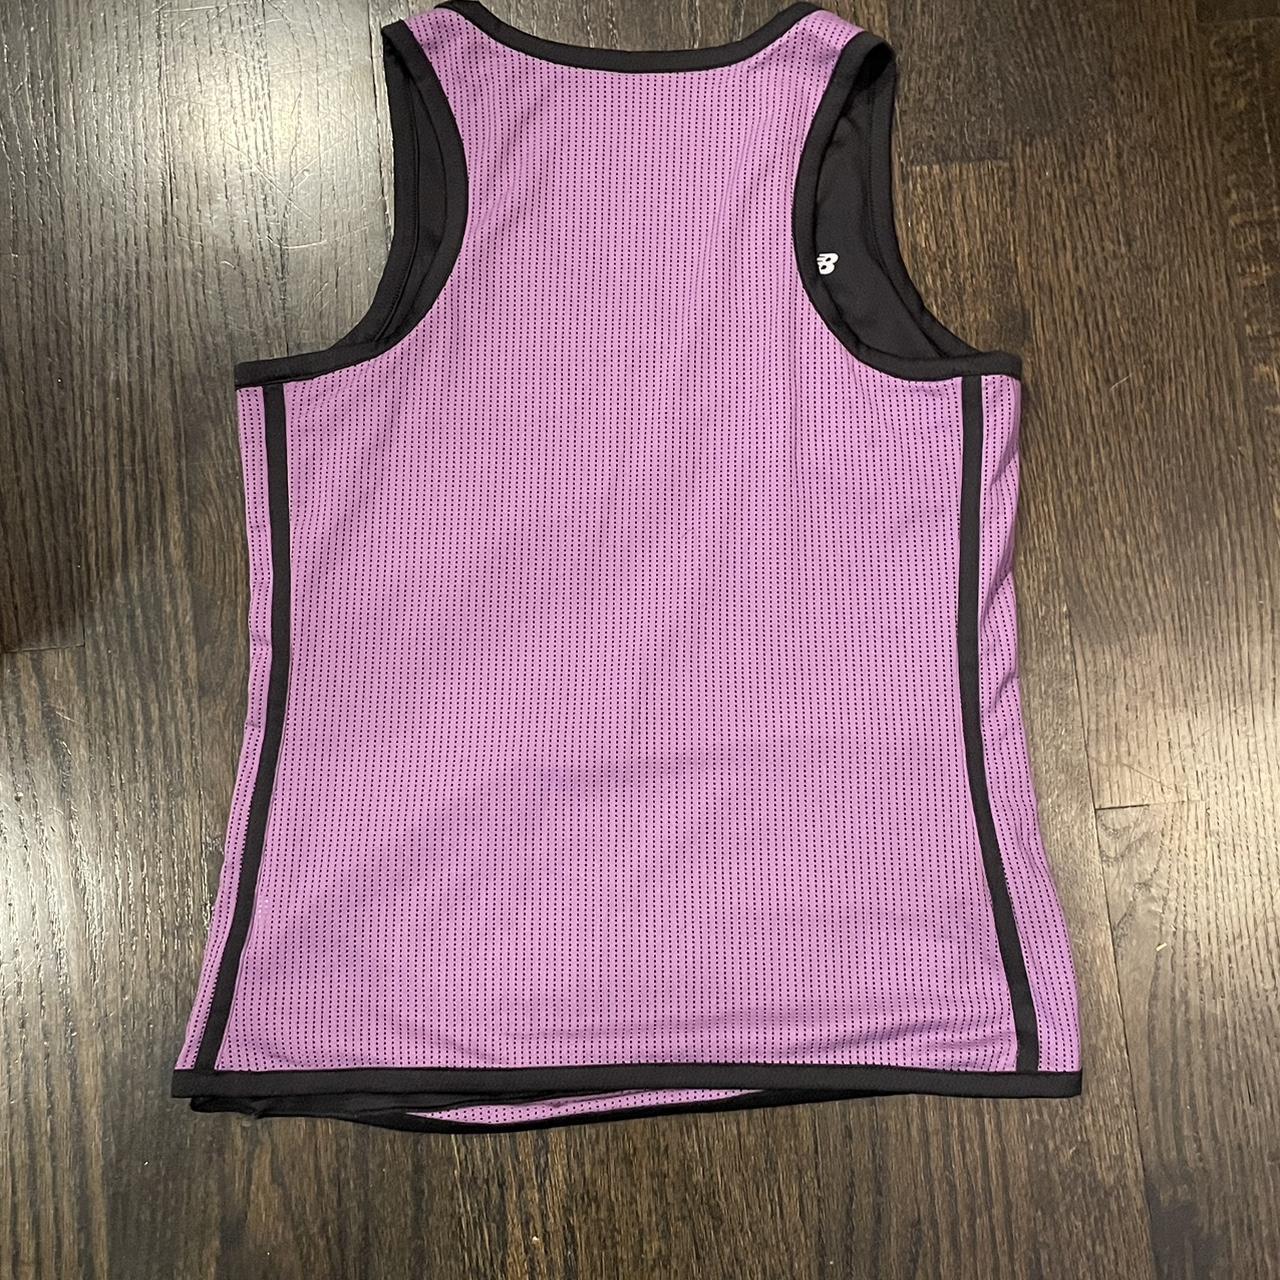 New Balance Women's Purple and Black Vest (6)